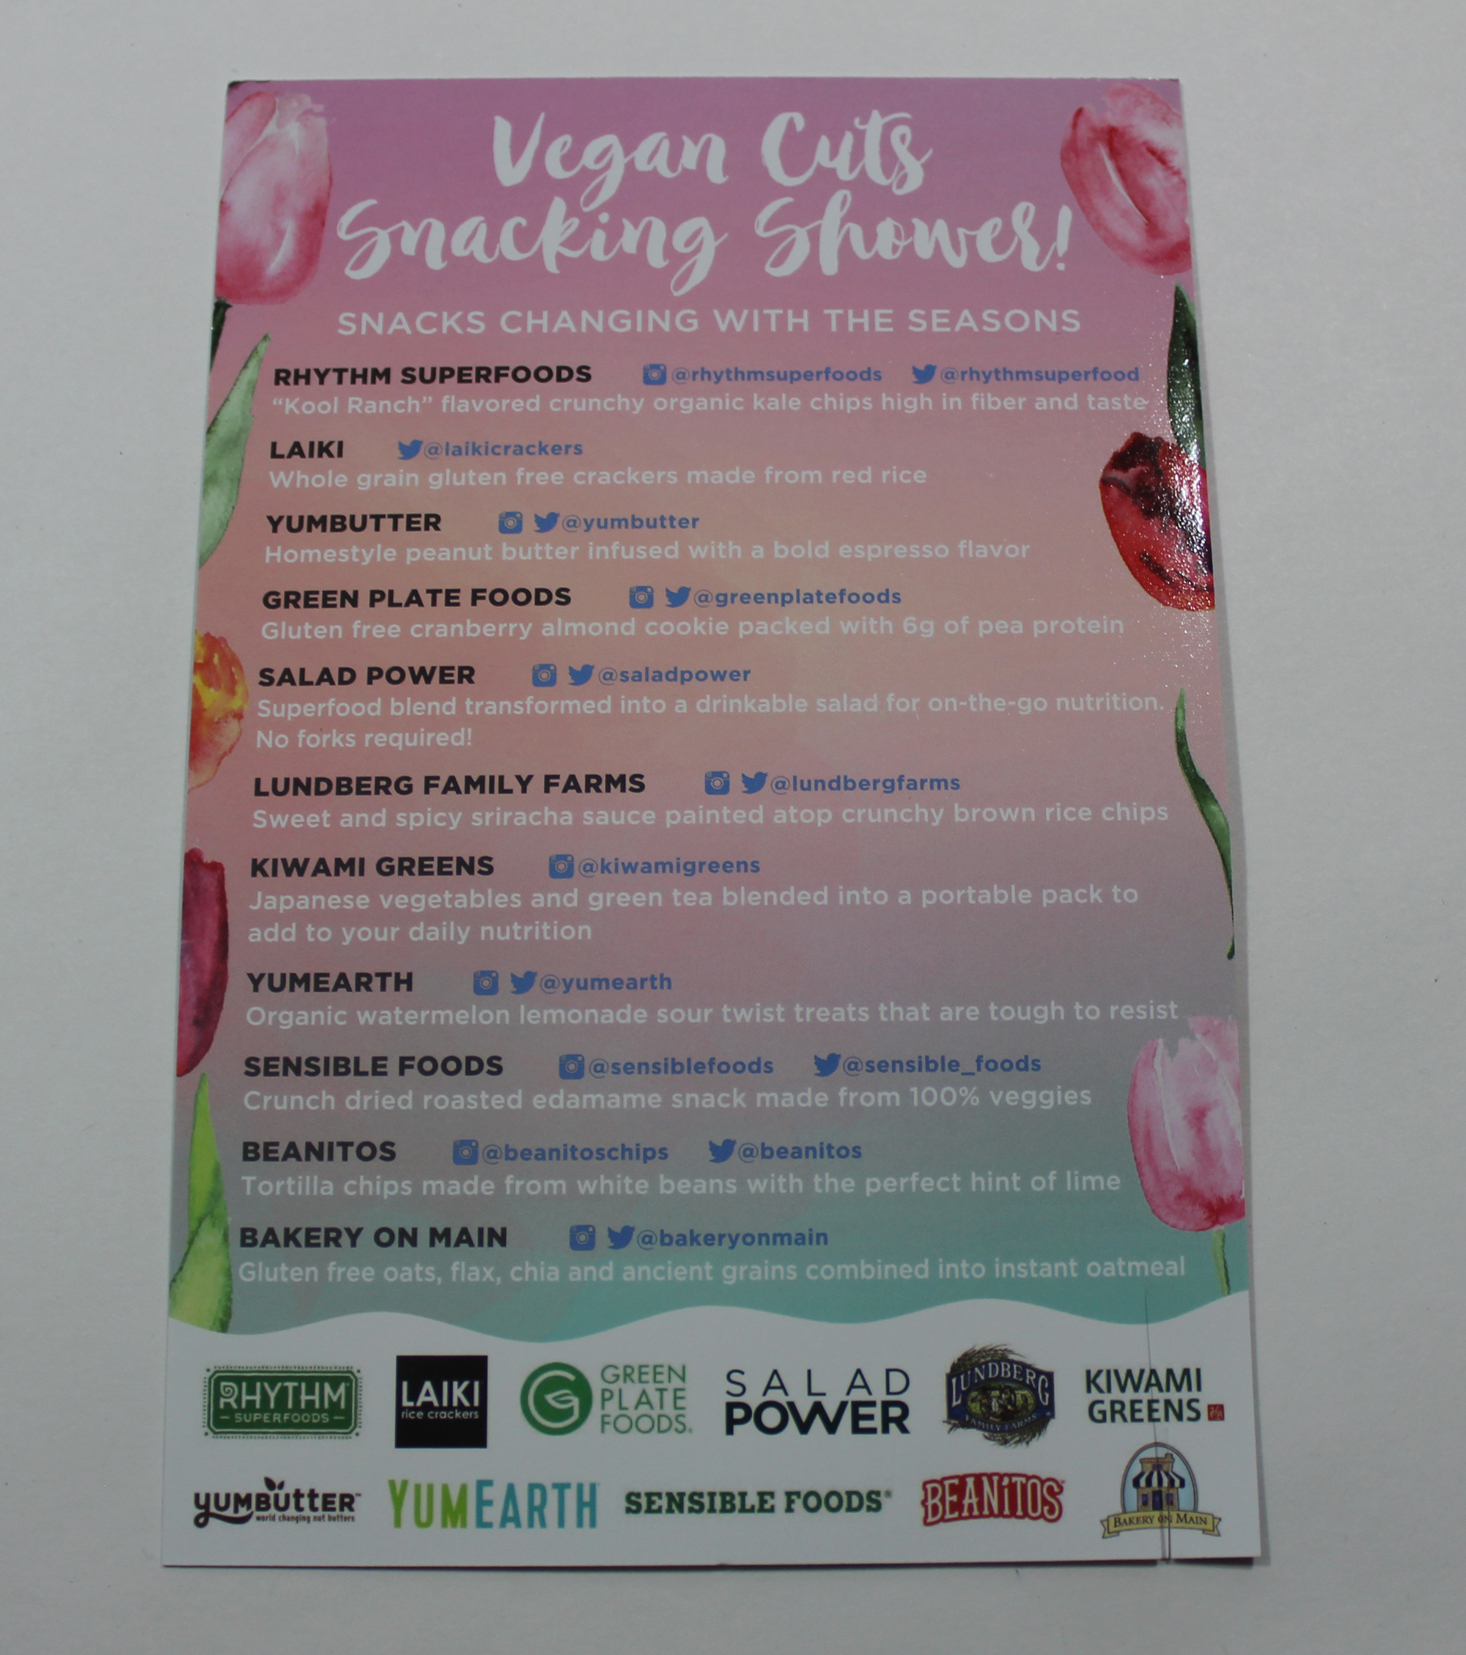 vegan-cuts-snack-april-2017-booklet-back